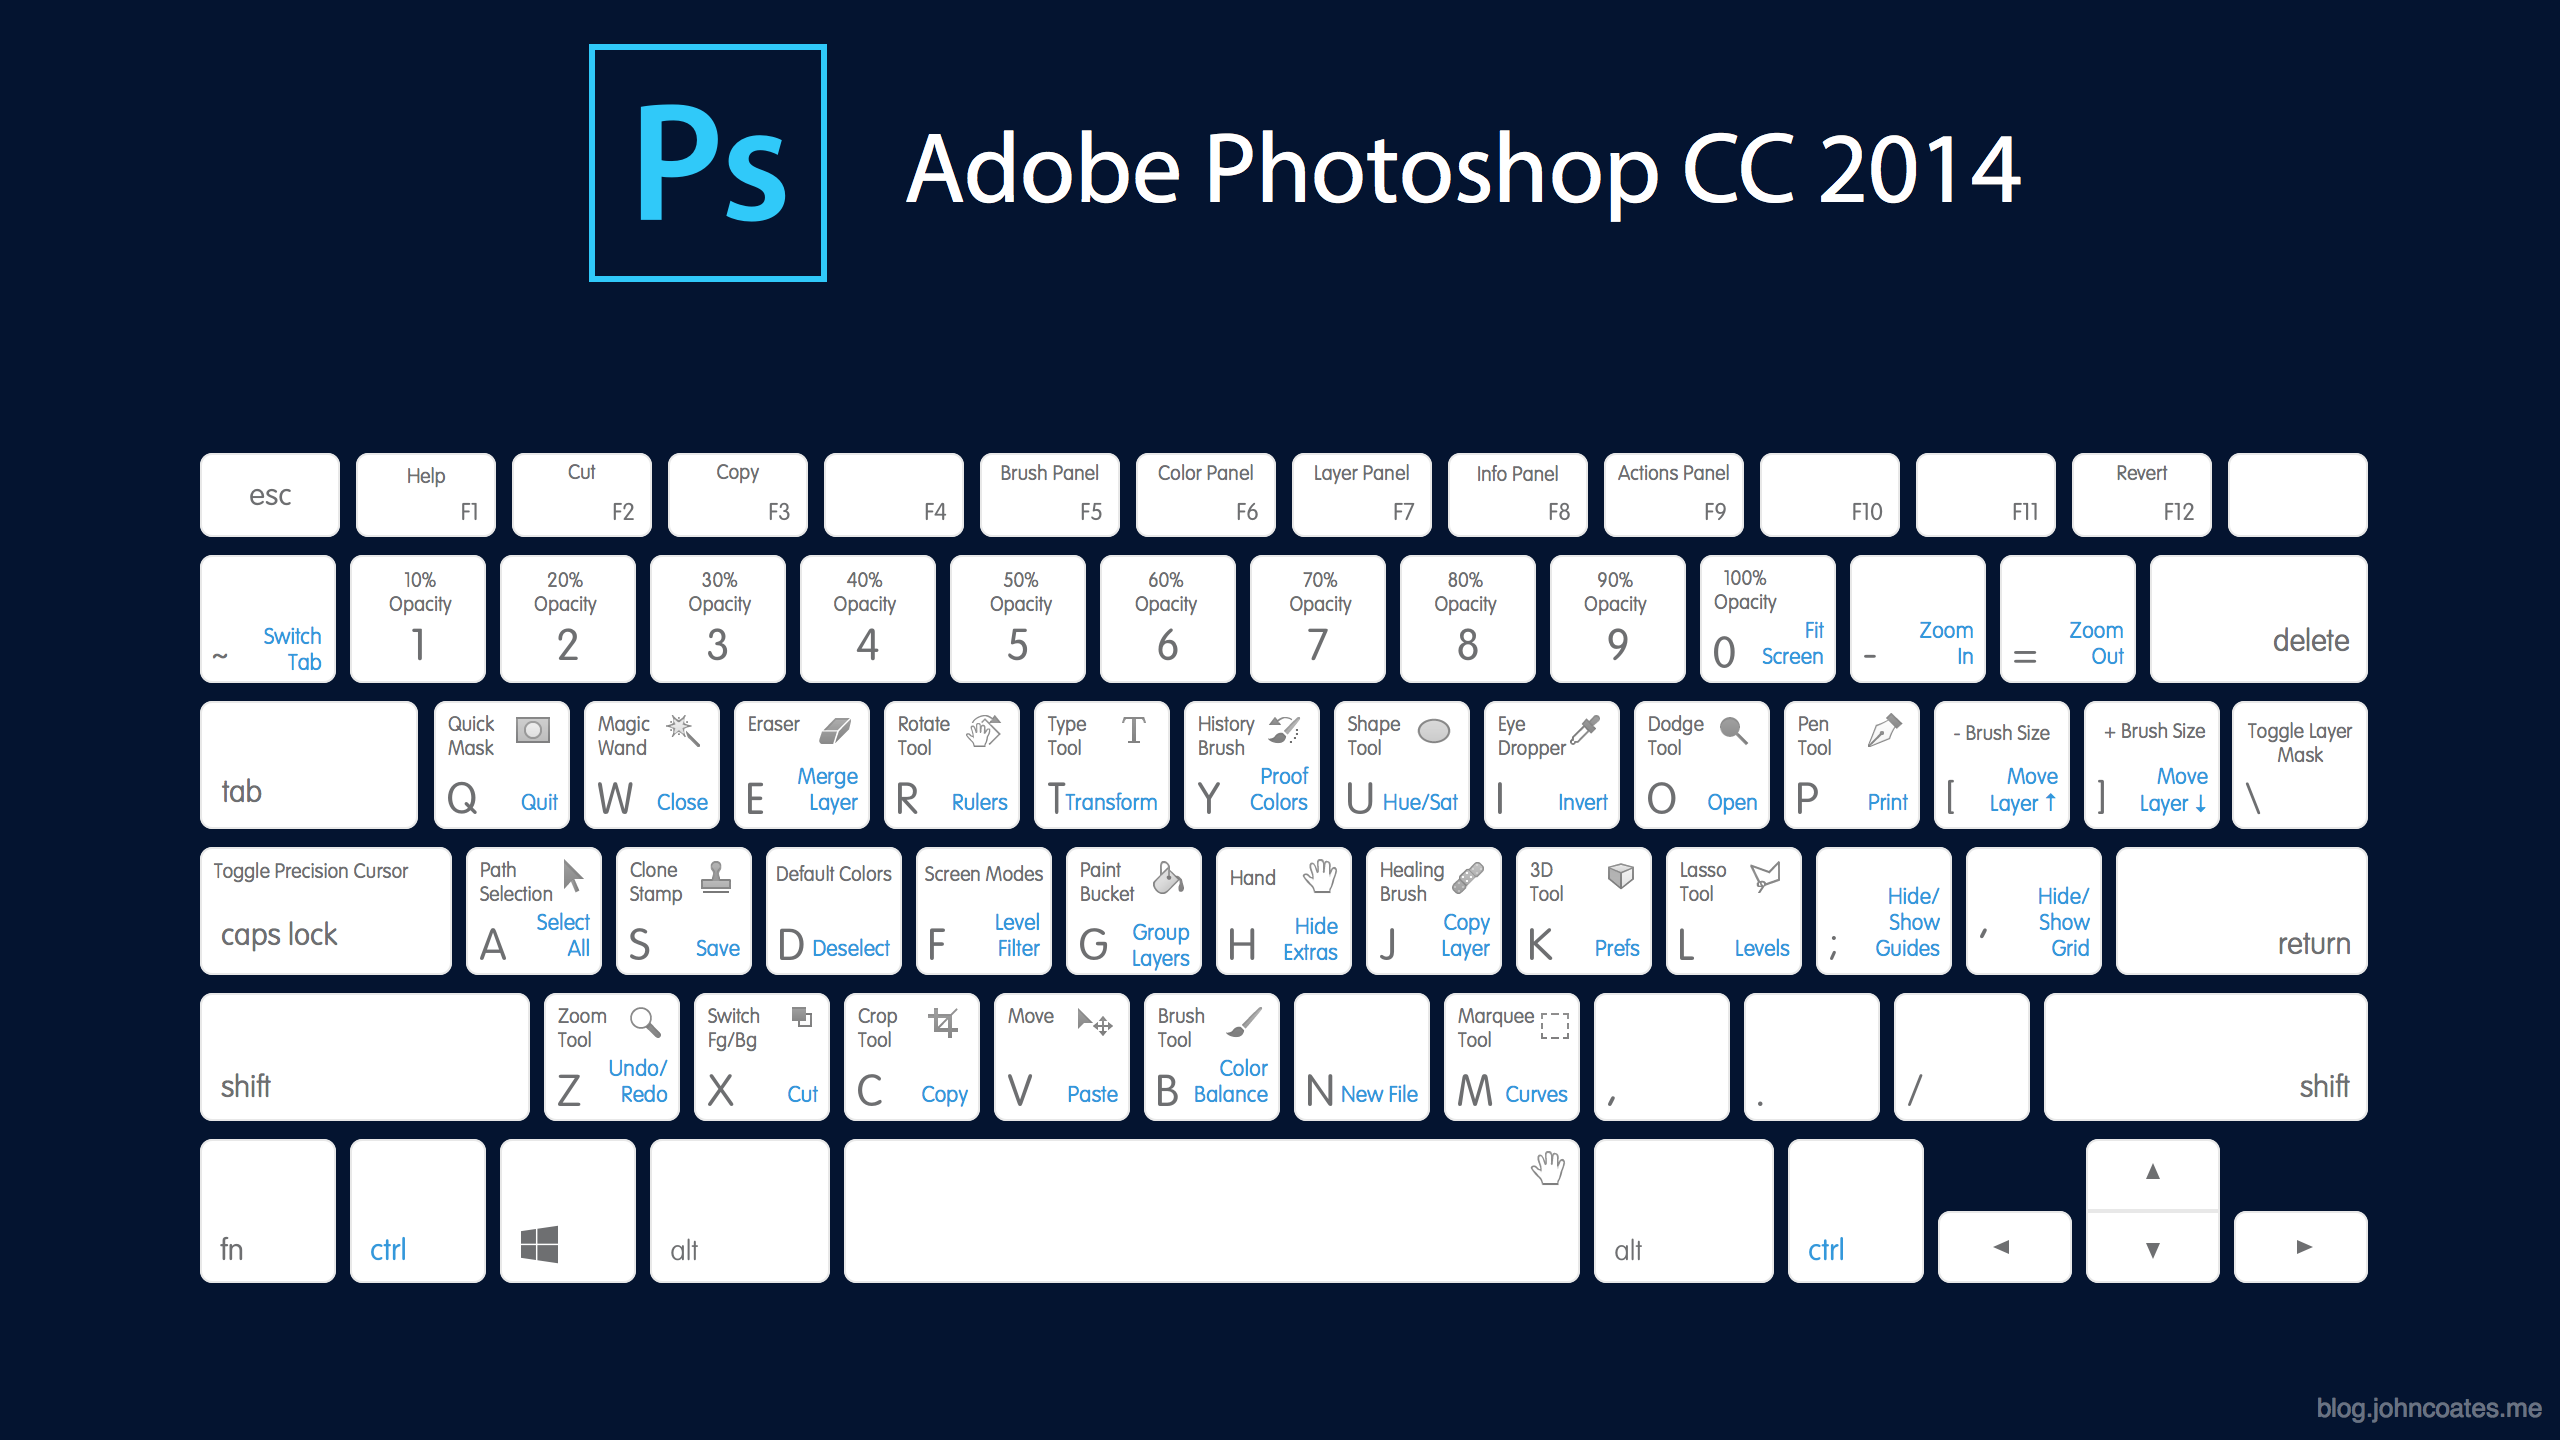 Adobe-Photoshop-CC-2014-Cheat-Sheet-Windows.png